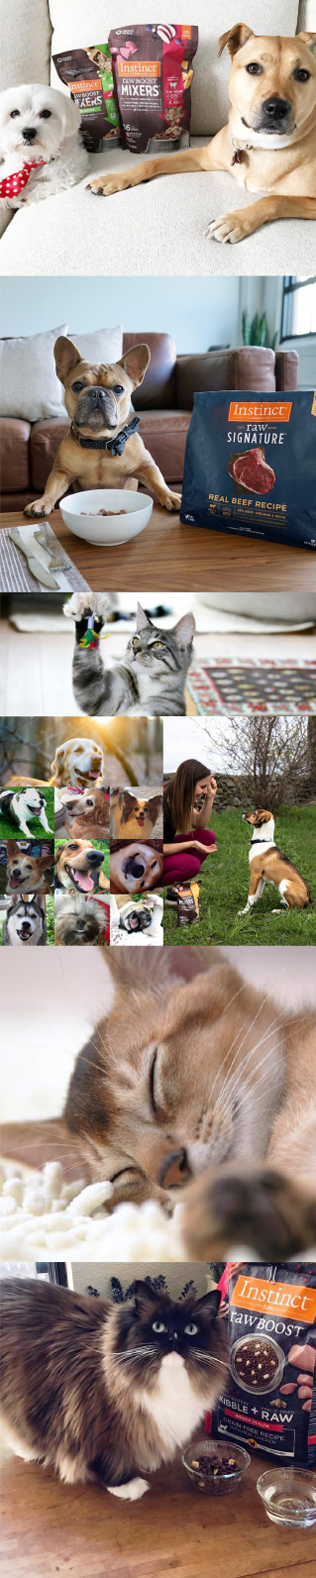 Instinct raw petfood images インスティンクト 生ペットフードイメージ